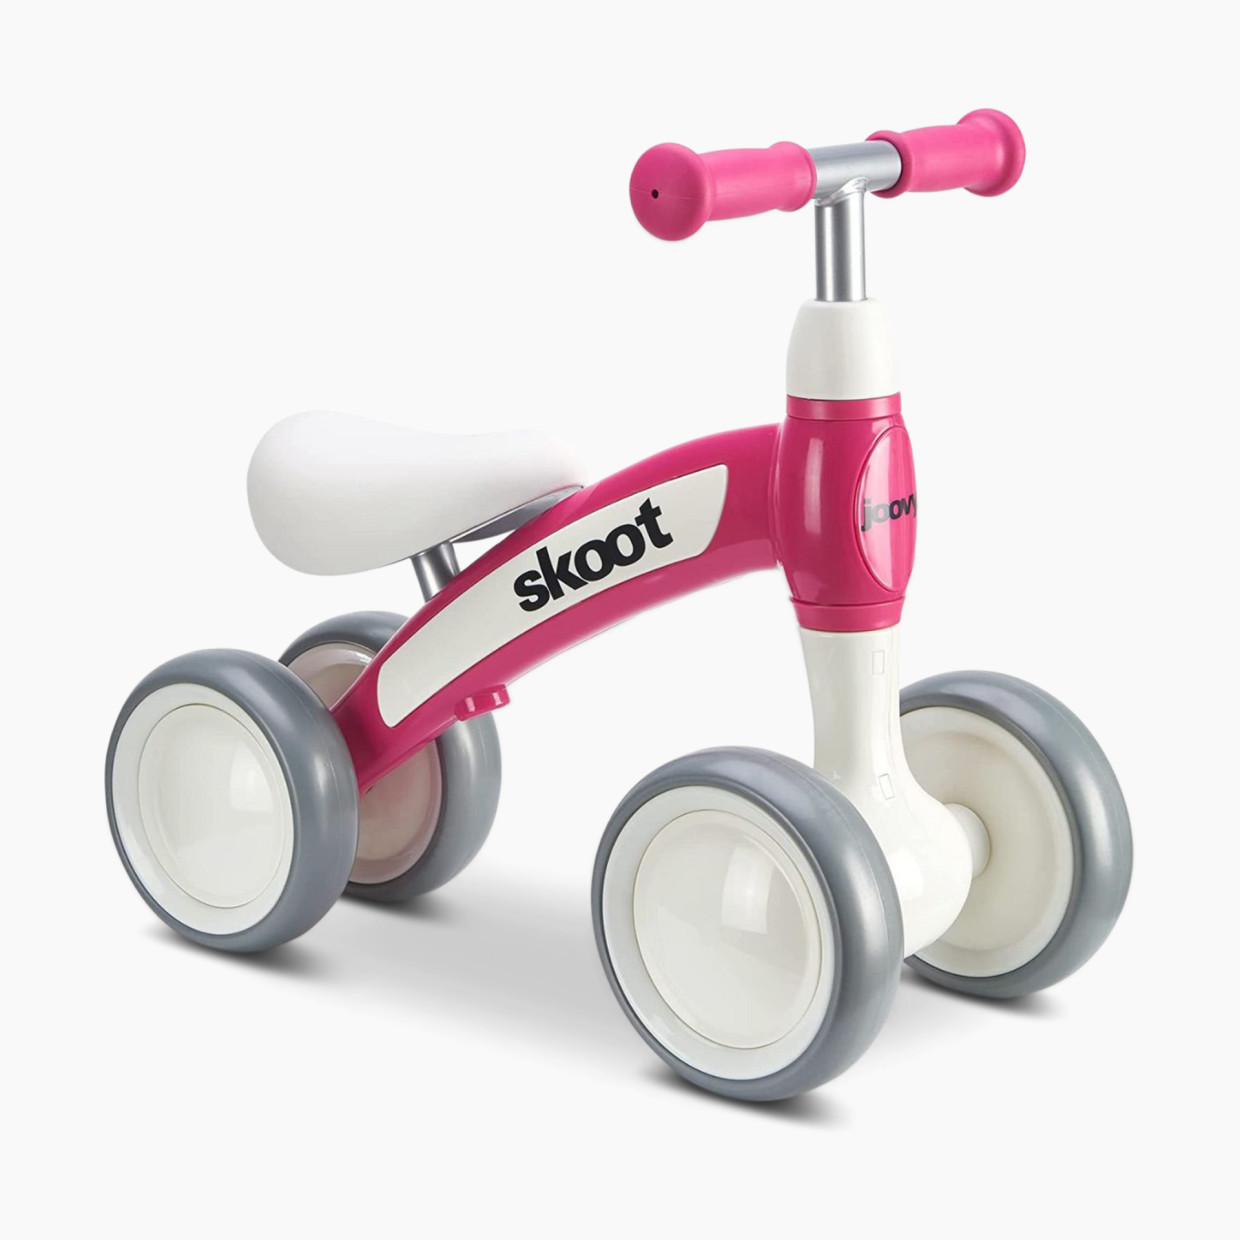 Joovy Skoot Toddler Balance Bike - Pink Crush.